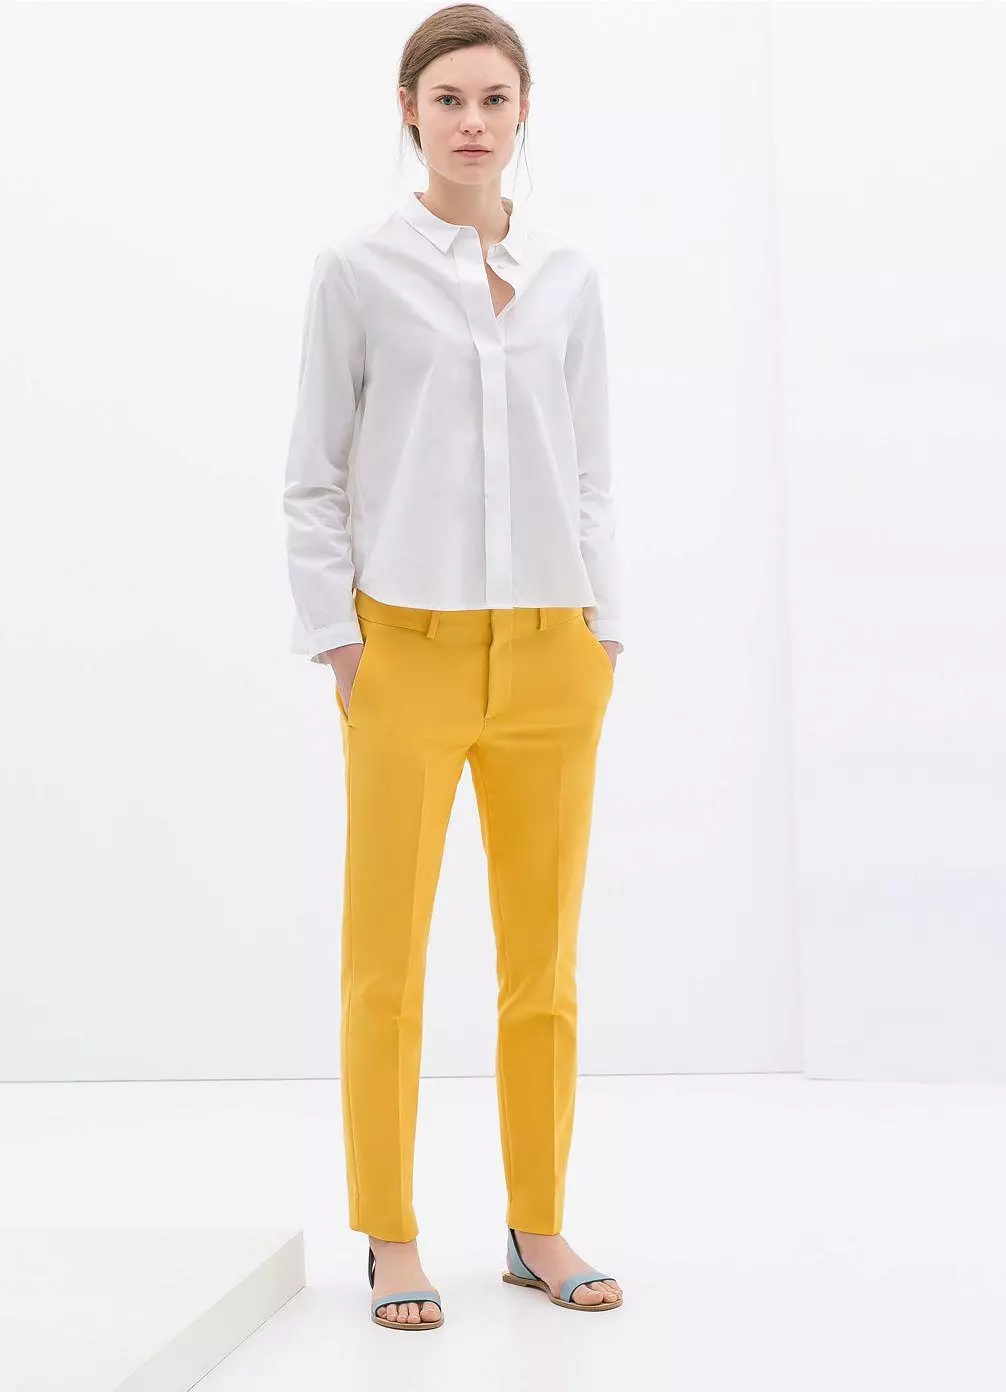 Celana Mode 2021: Model Bergaya Wanita, Tren Fashion 917_315